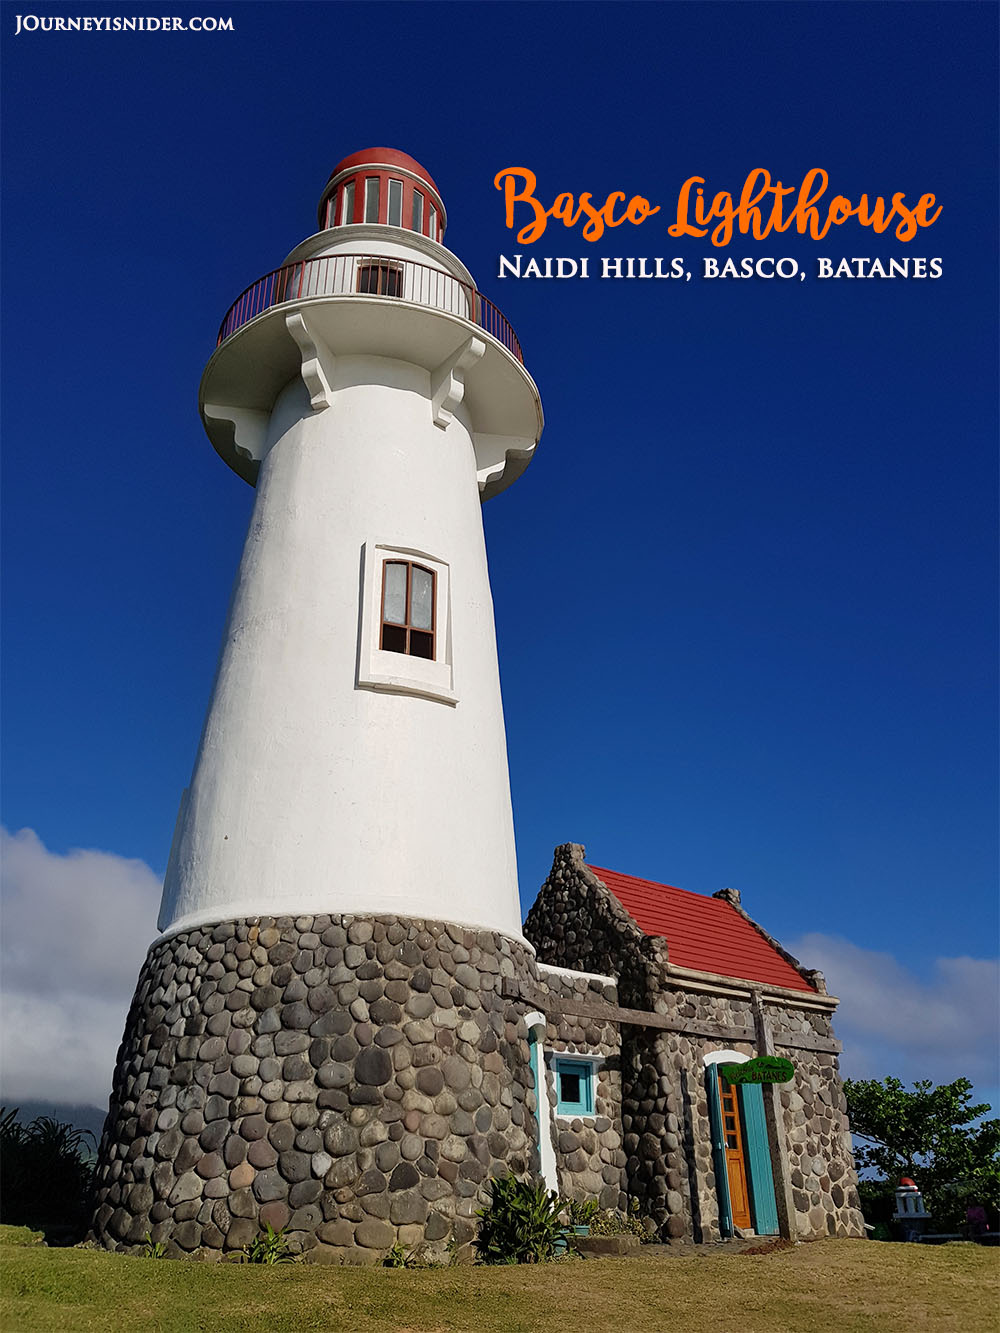 basco-lighthouse-in-naidi-hills-basco-batanes